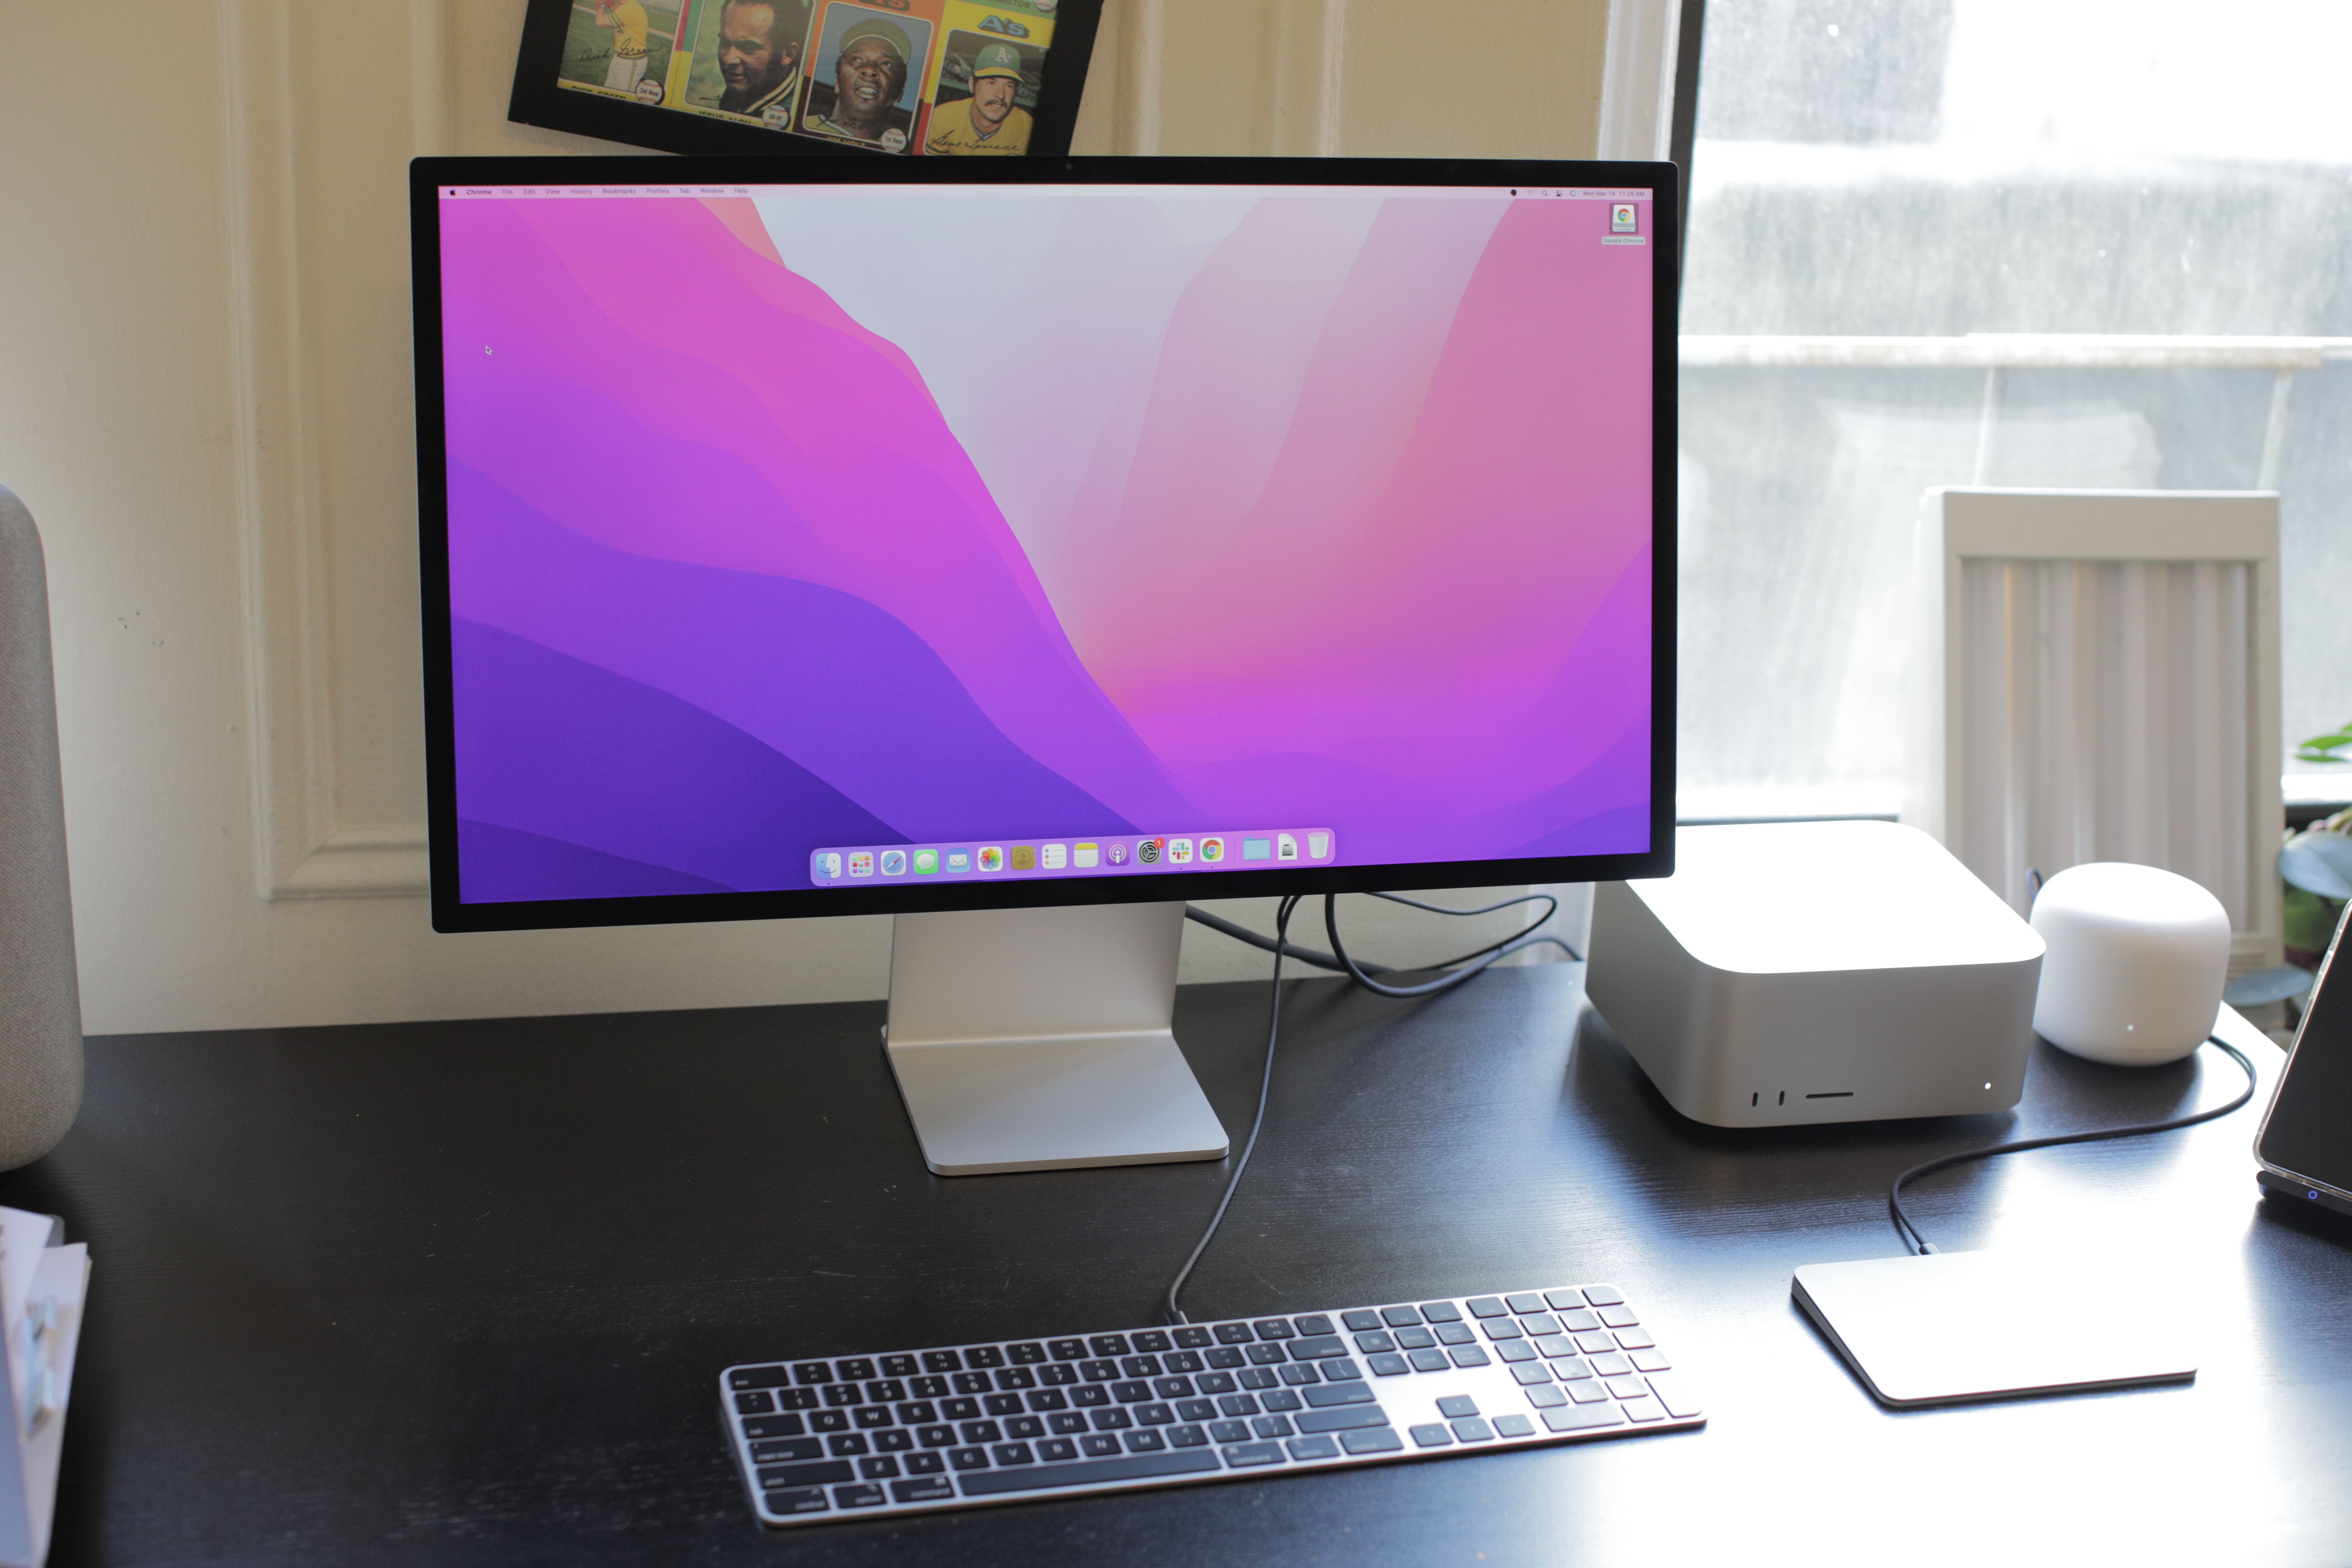 Apple iMac studio display computer desktop 2022 set up with keyboard, mouse track